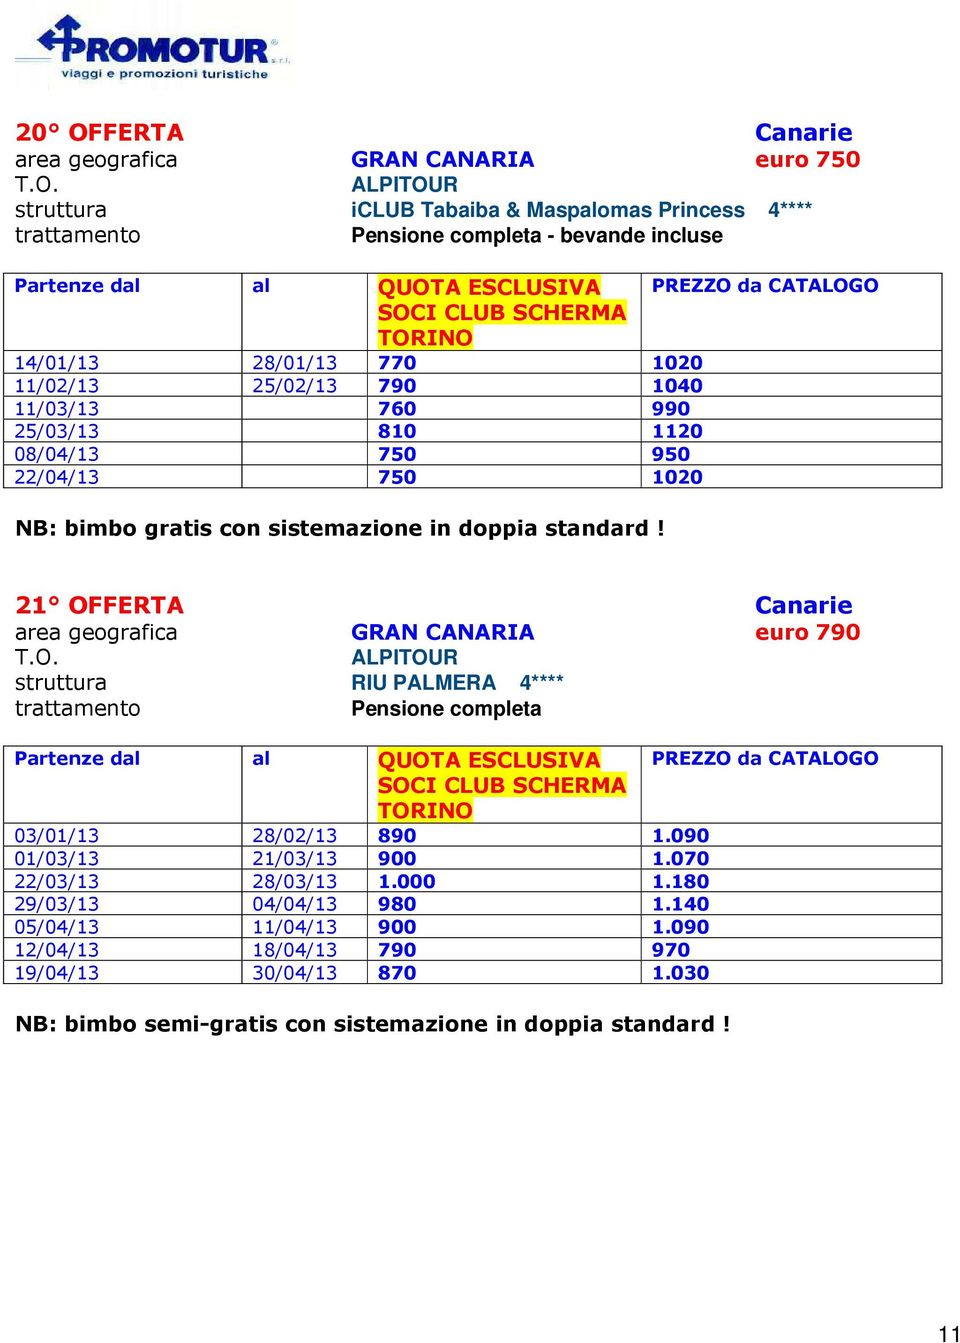 21 OFFERTA Canarie area geografica GRAN CANARIA euro 790 RIU PALMERA 4**** Pensione completa 03/01/13 28/02/13 890 1.090 01/03/13 21/03/13 900 1.